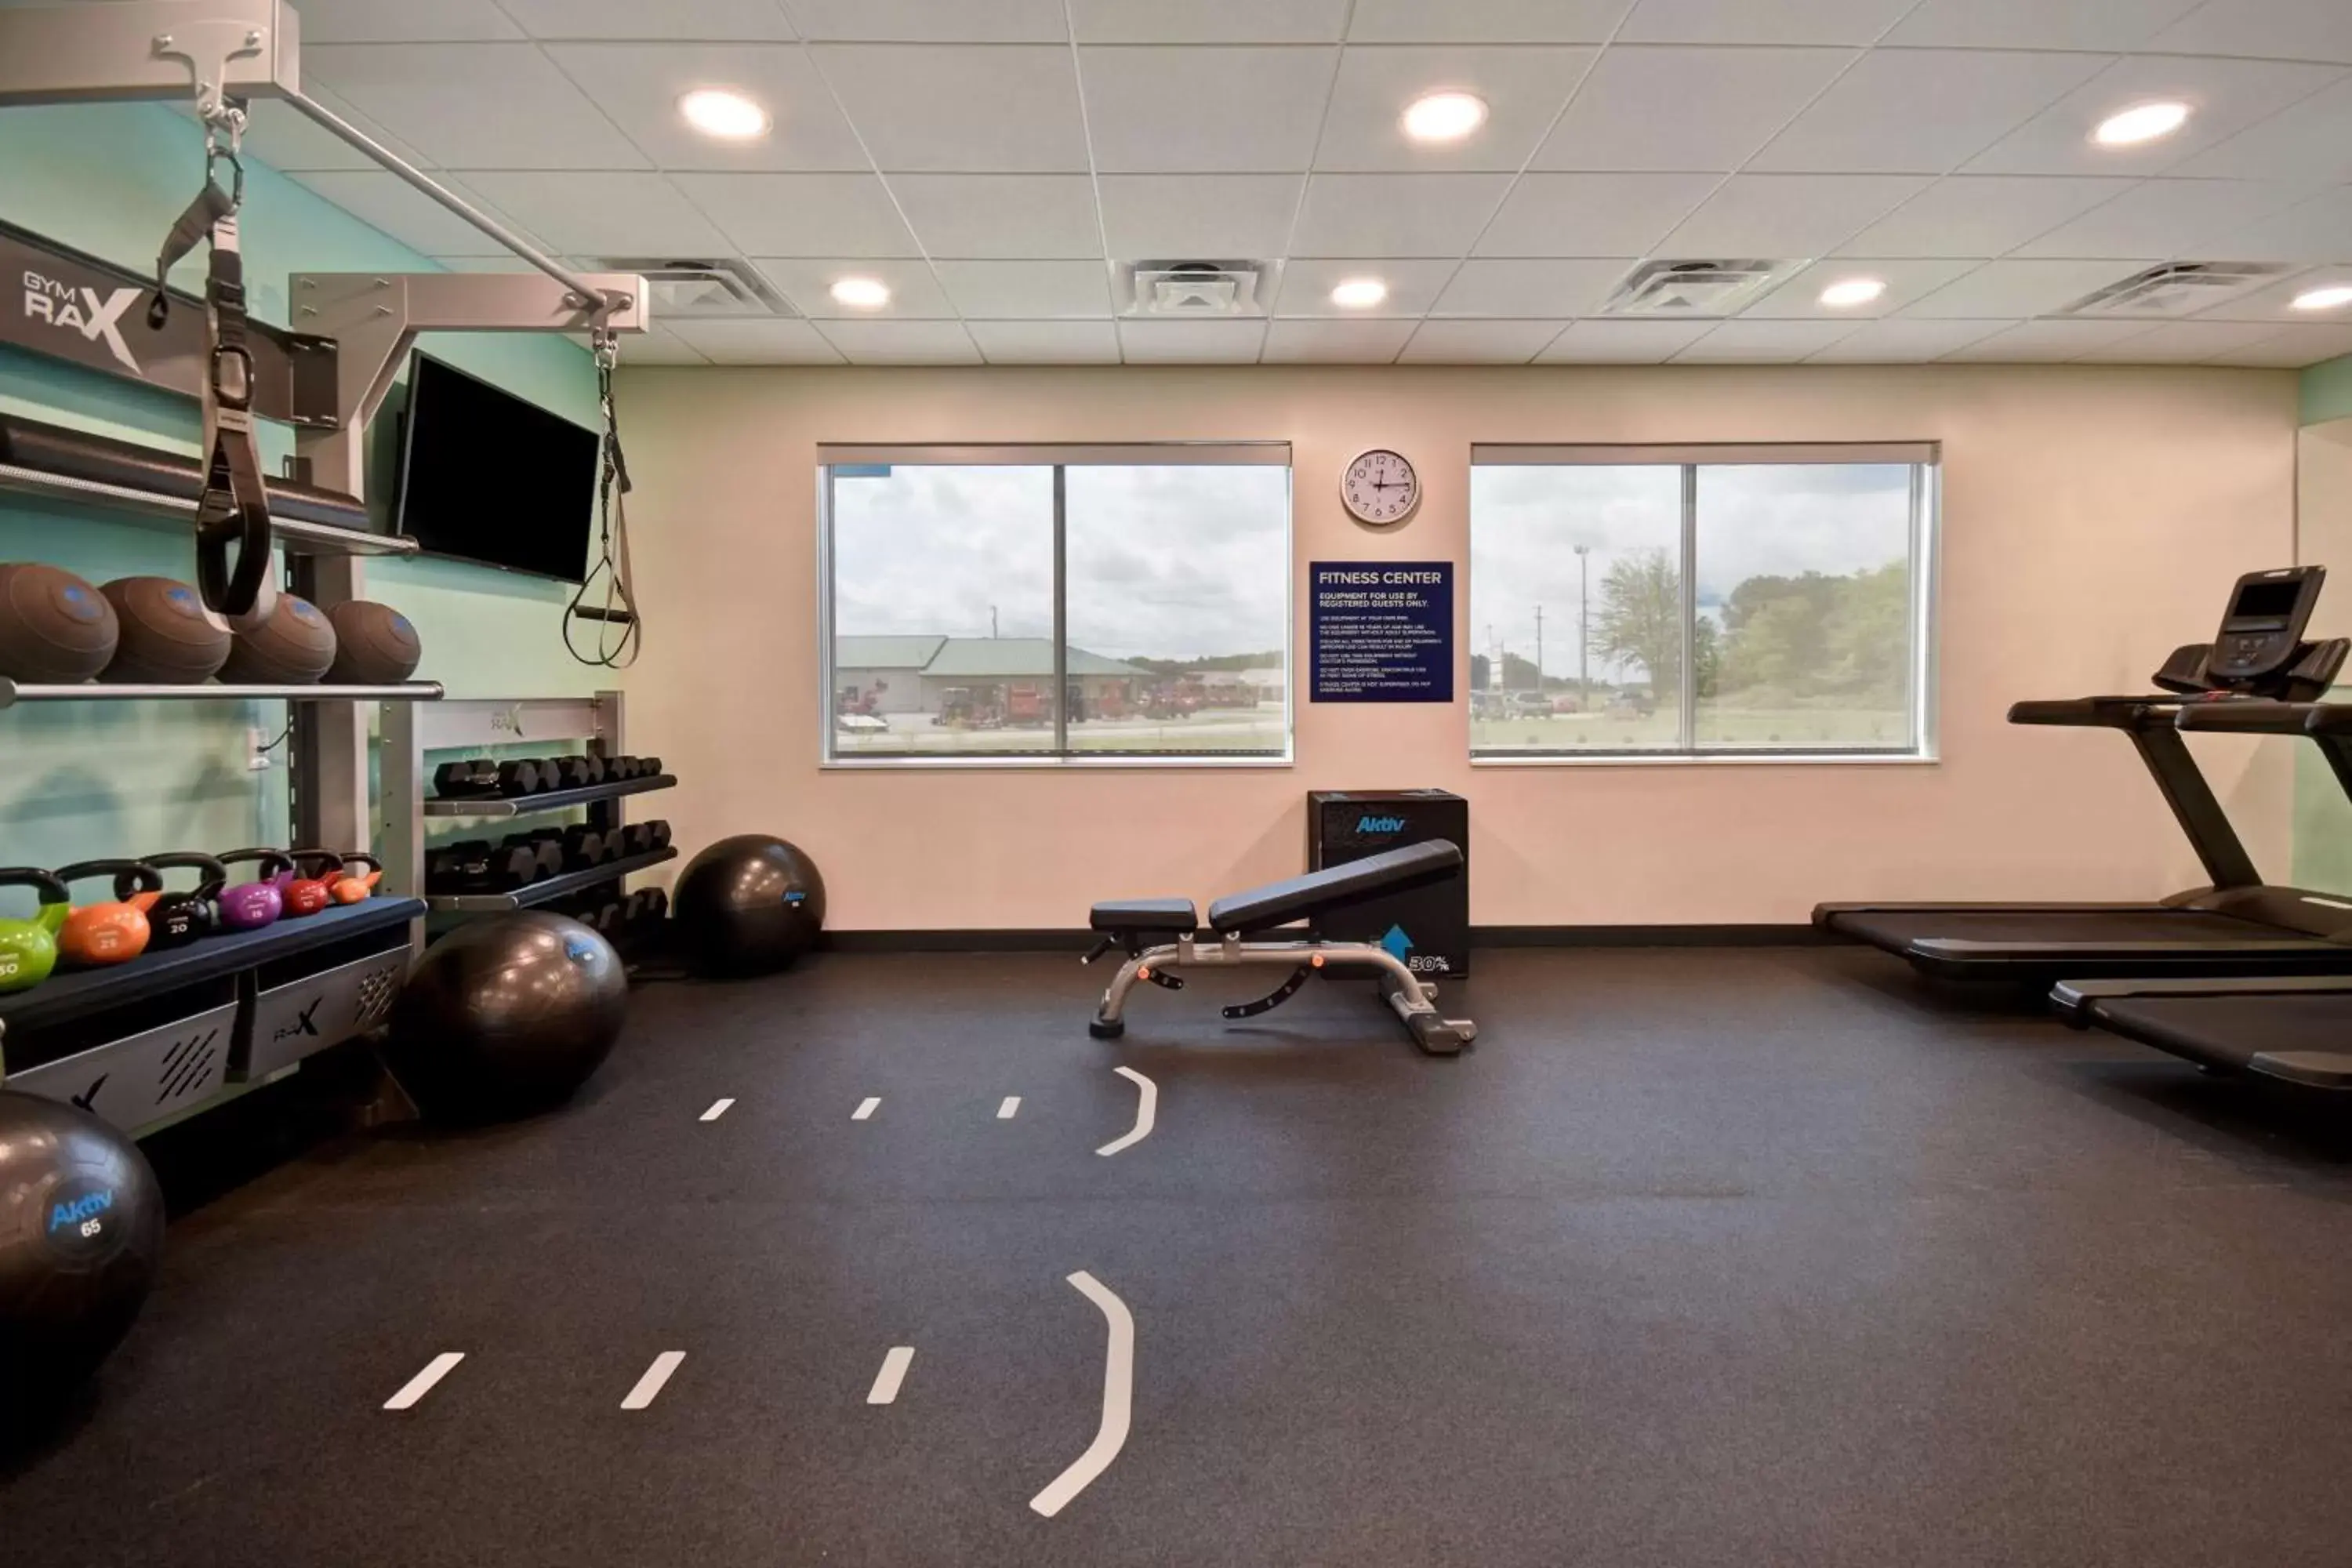 Fitness centre/facilities, Fitness Center/Facilities in Tru By Hilton Auburn, In